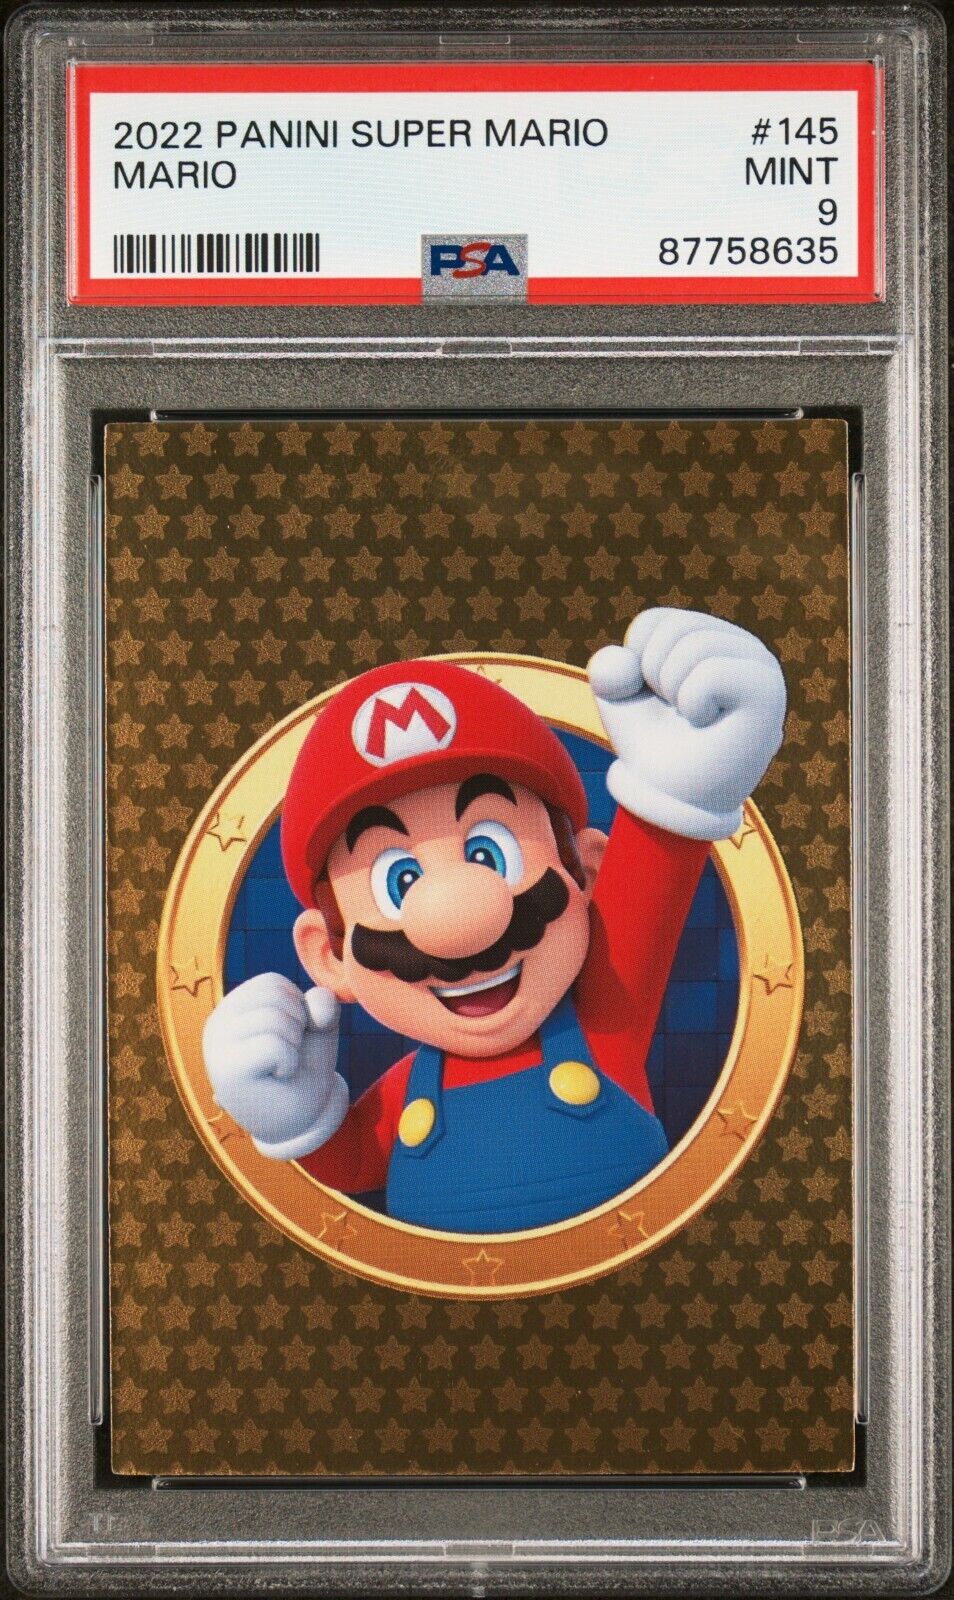 2022 Panini Super Mario Mario Gold Card PSA 9 (Mint)